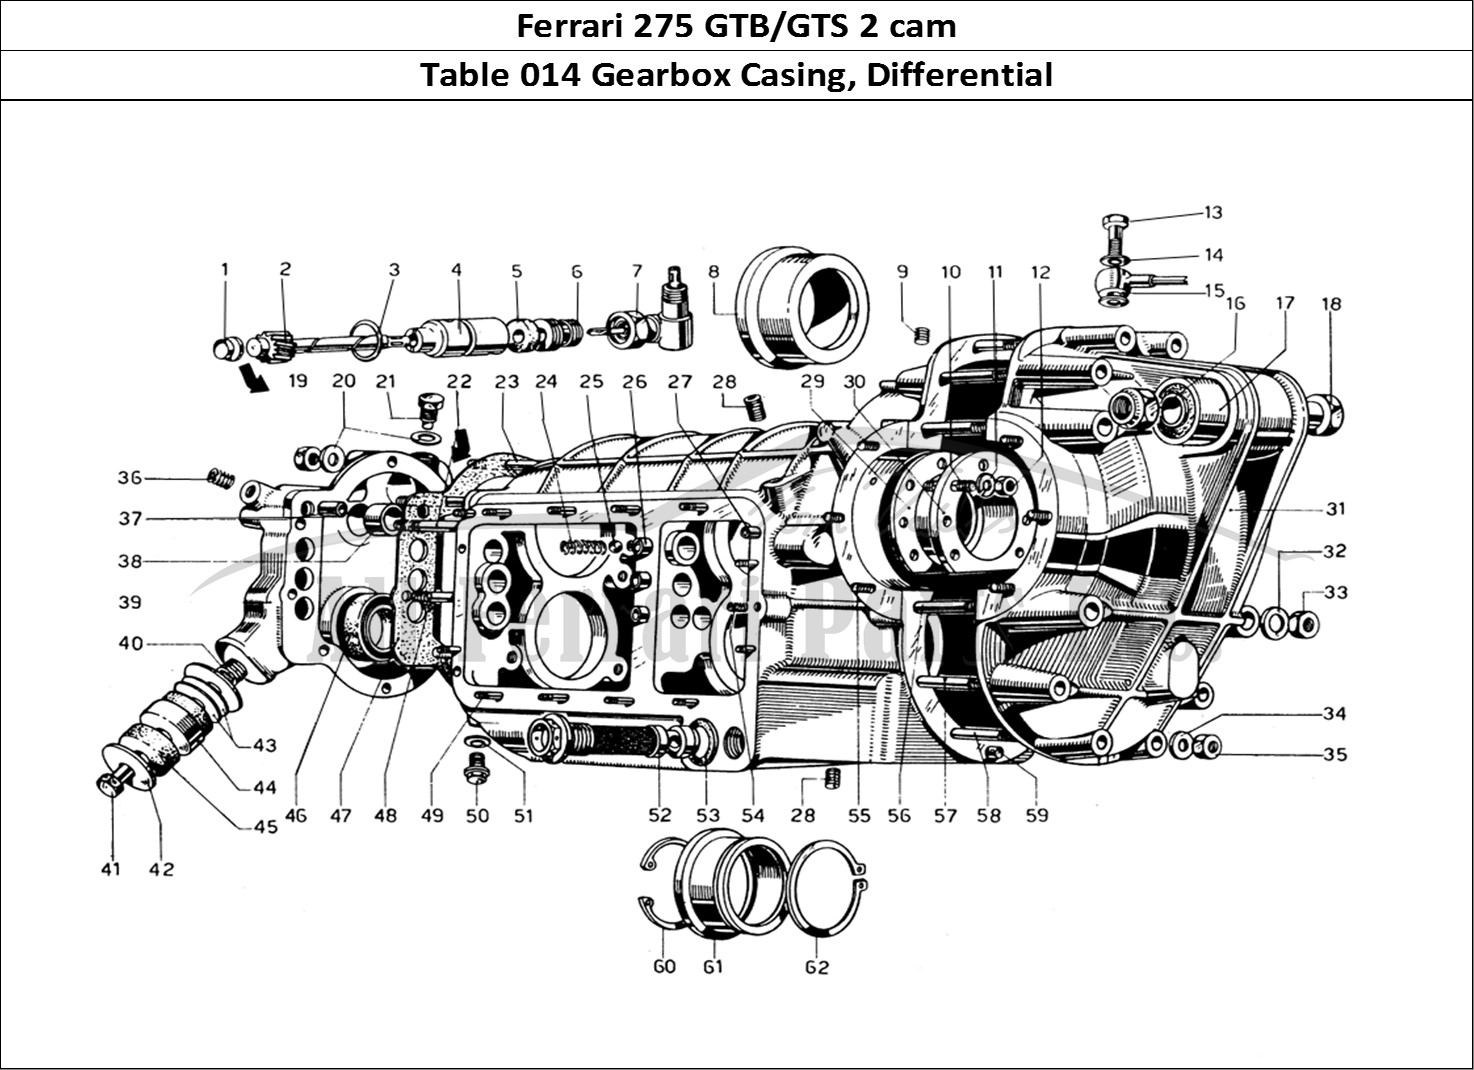 Ferrari Parts Ferrari 275 GTB/GTS 2 cam Page 014 Gearbox Casing - Differen